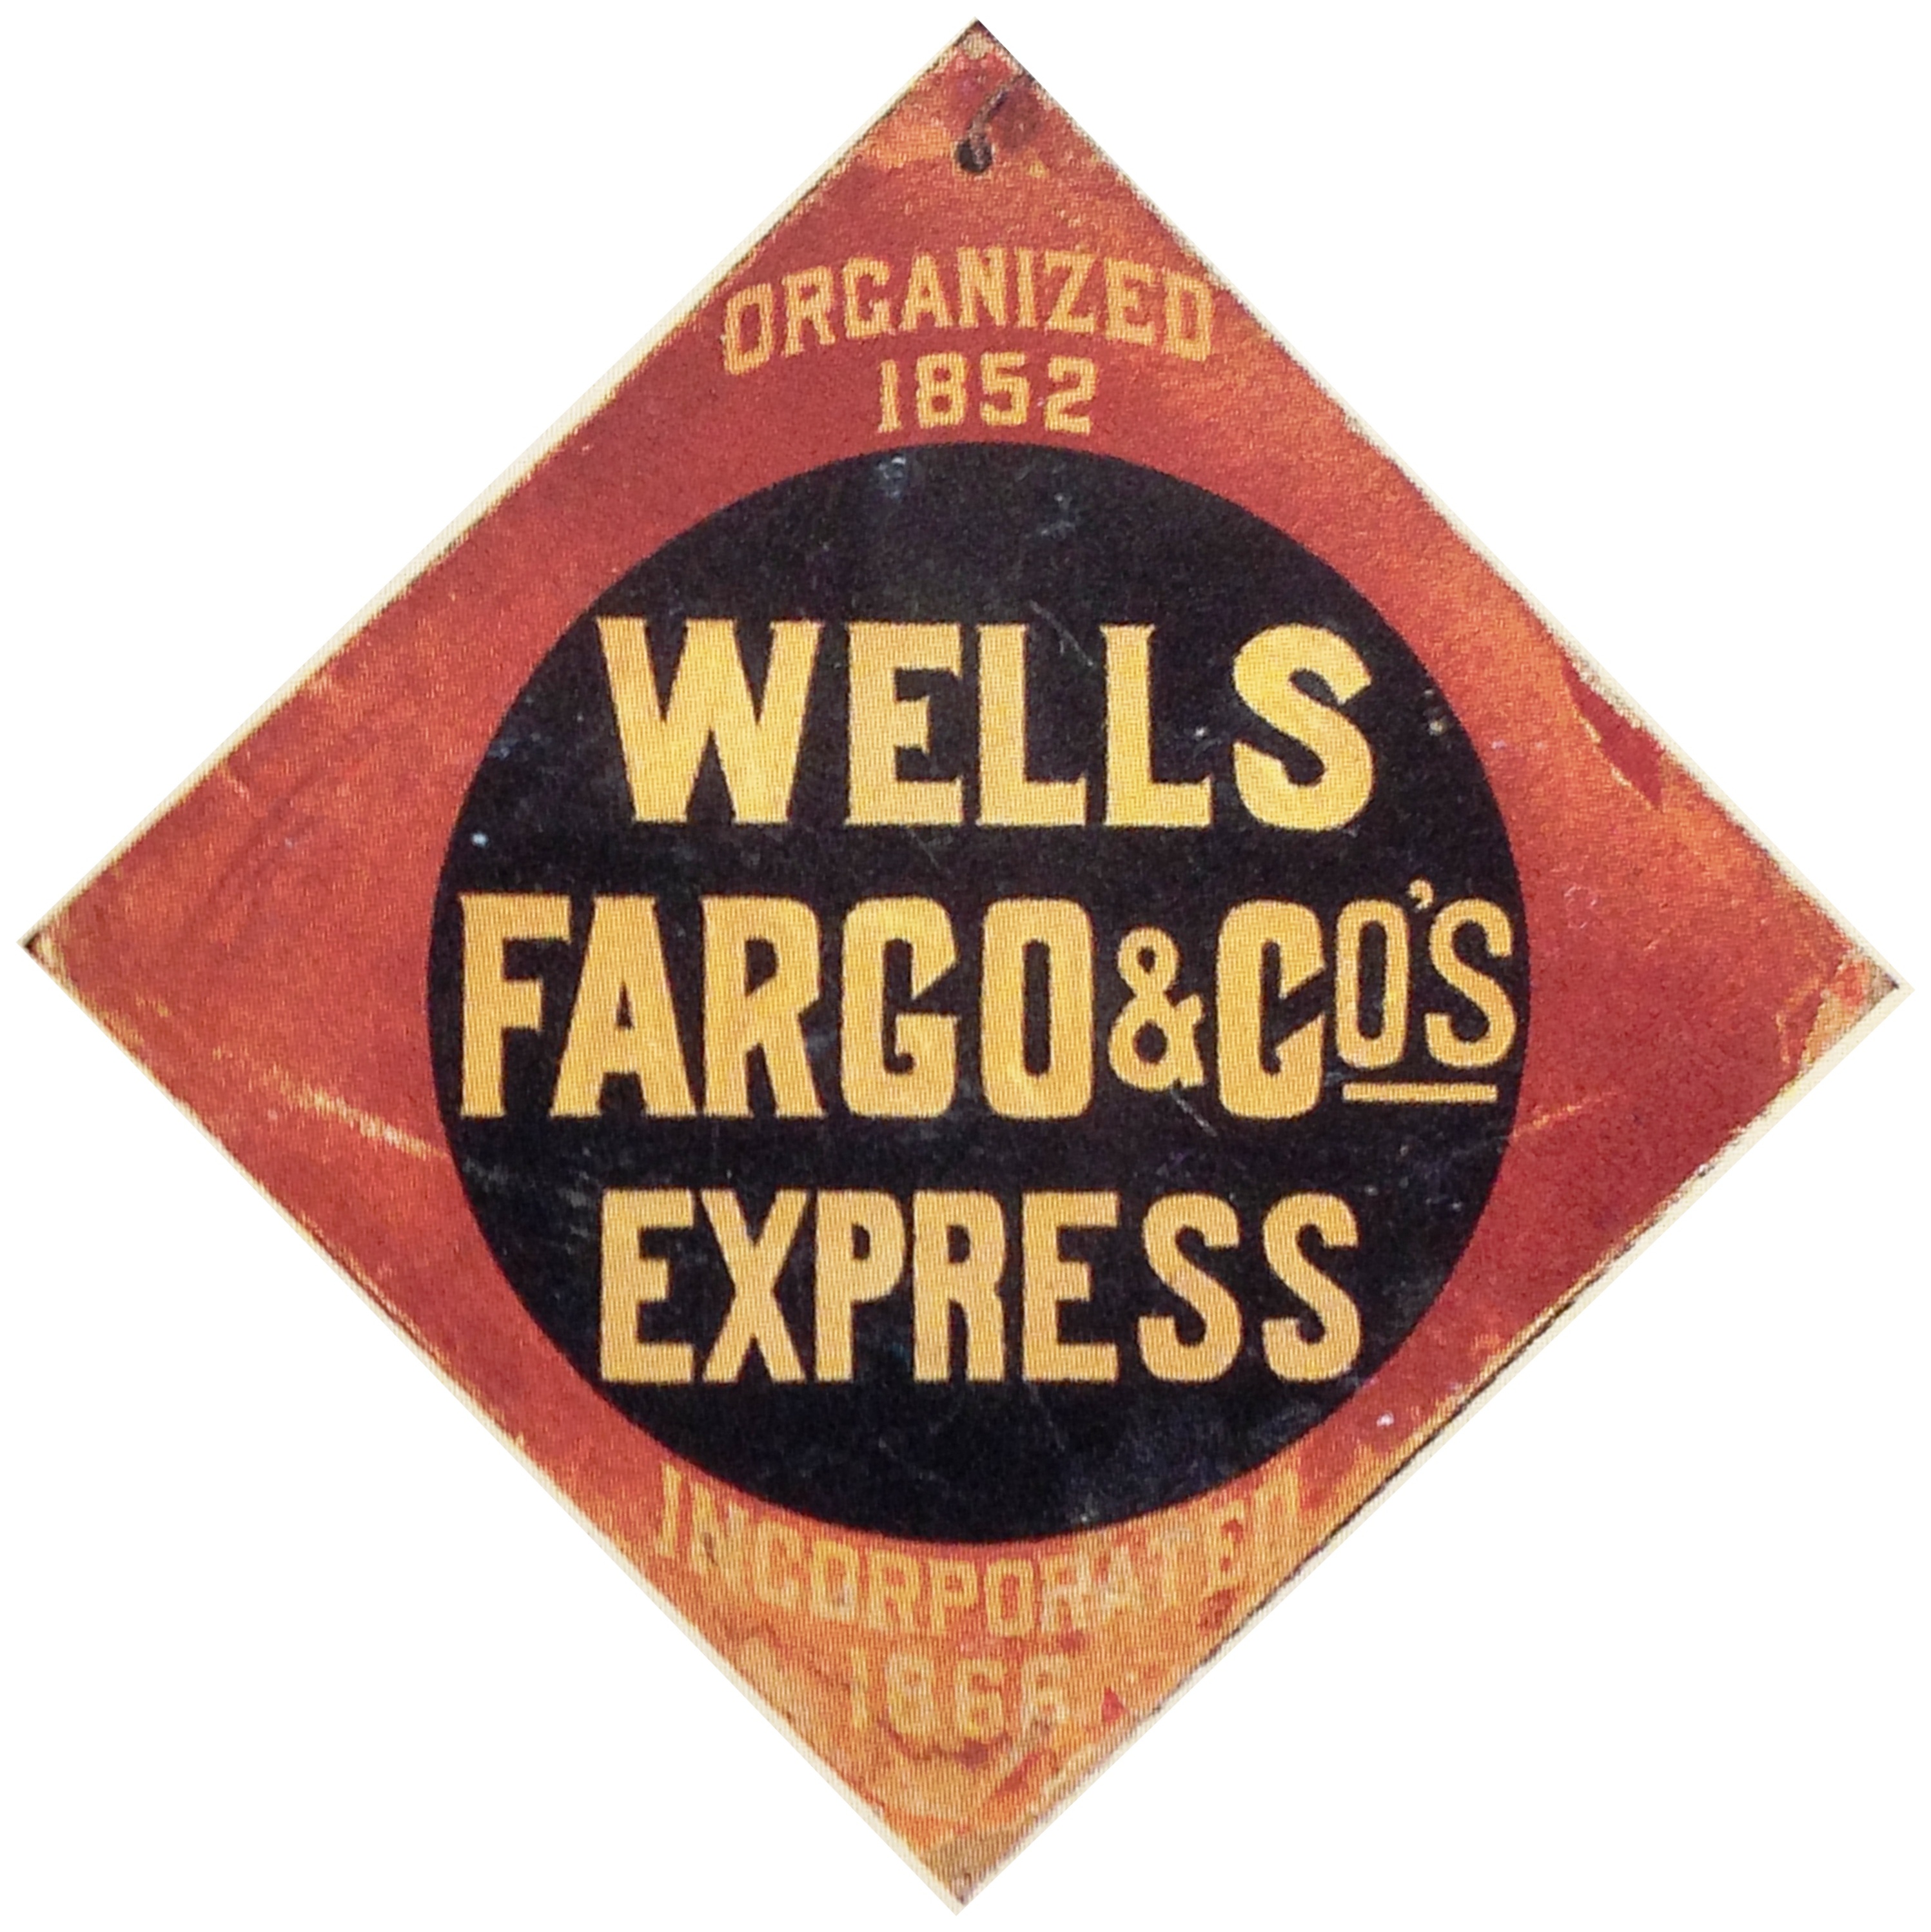 Wells Fargo & Co.'s Express cardboard Call Card